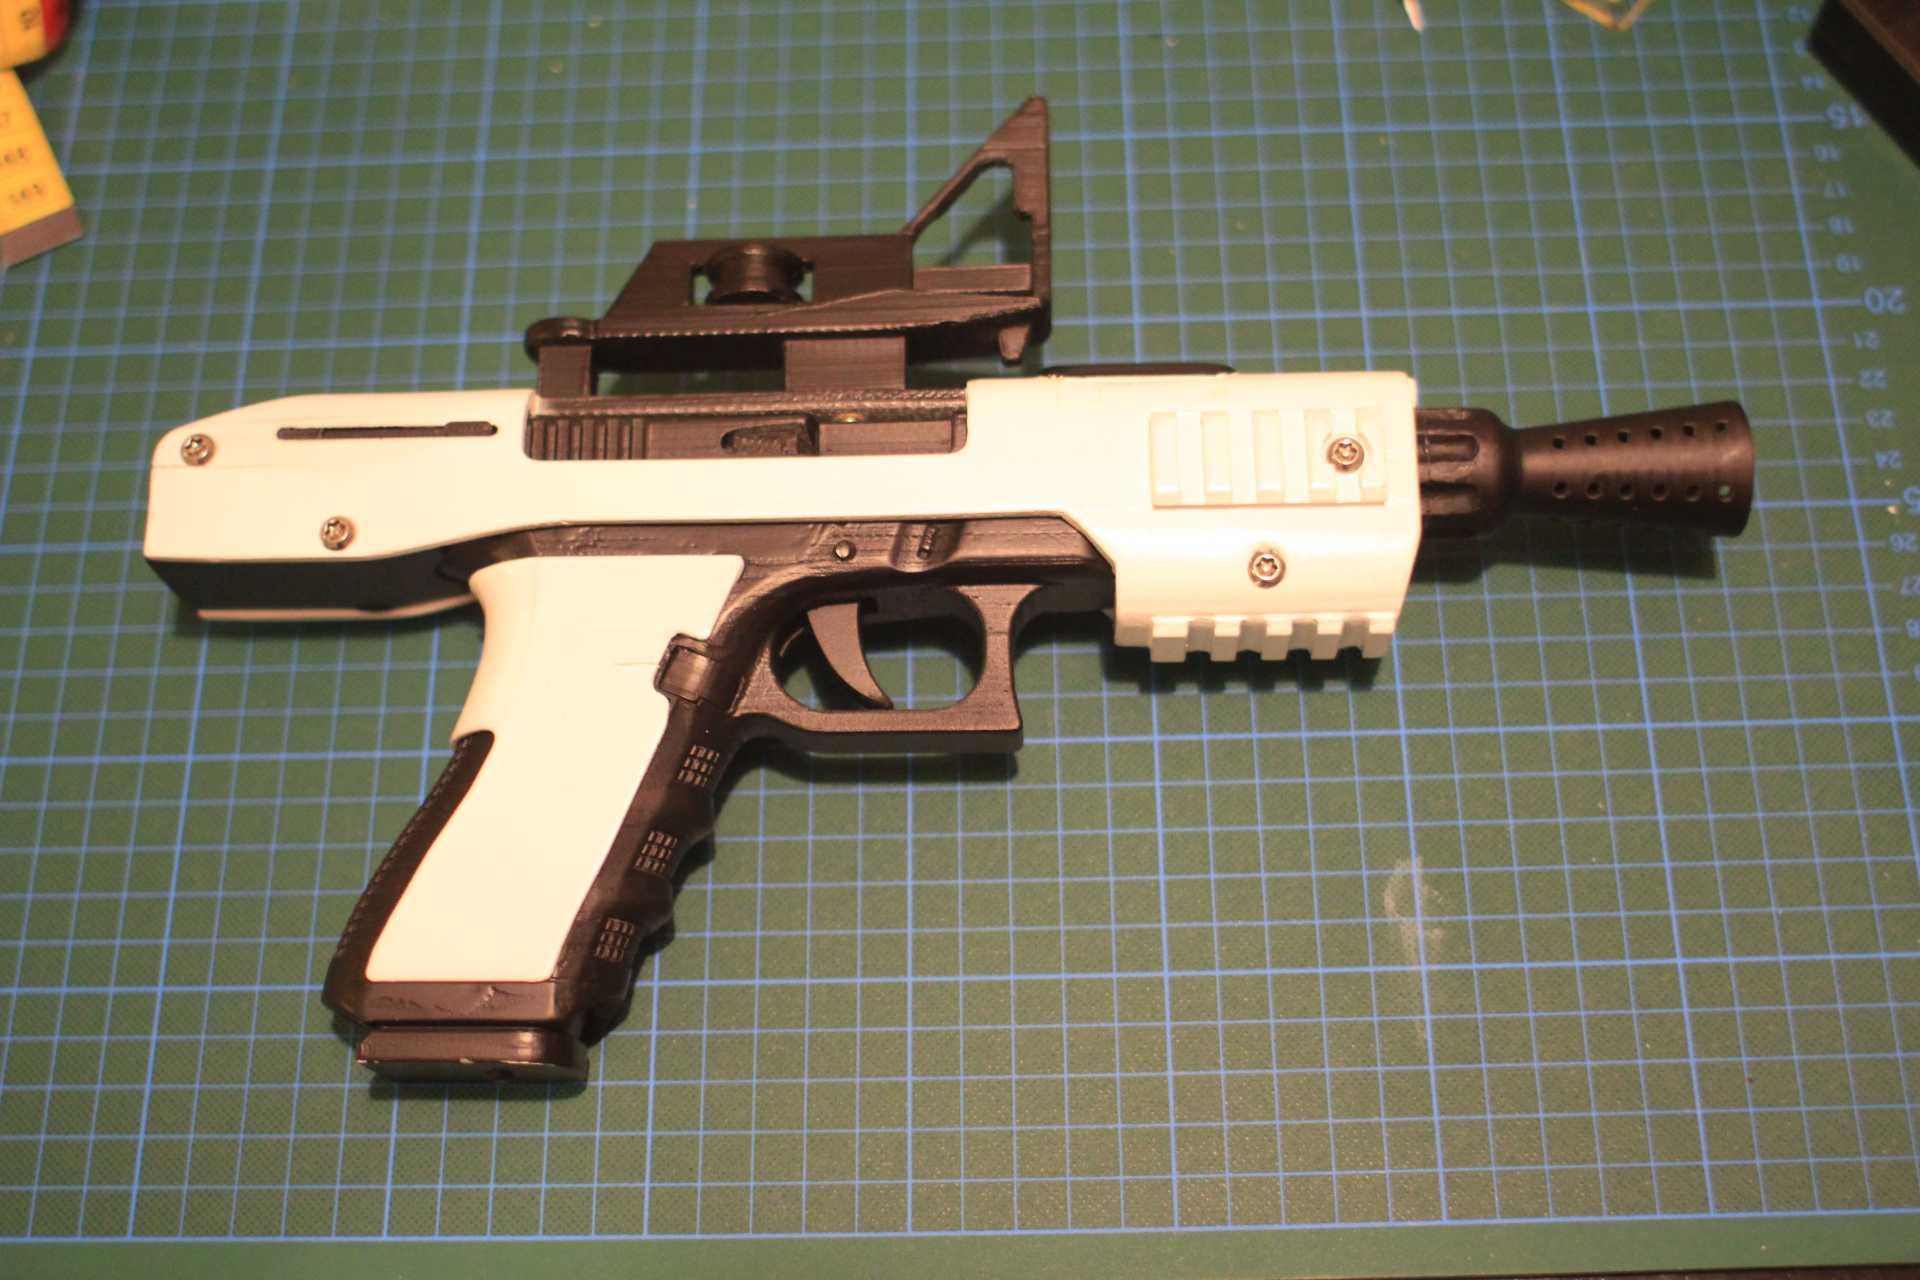 First Order SE 44/SE 44c Blaster Pistol HD 